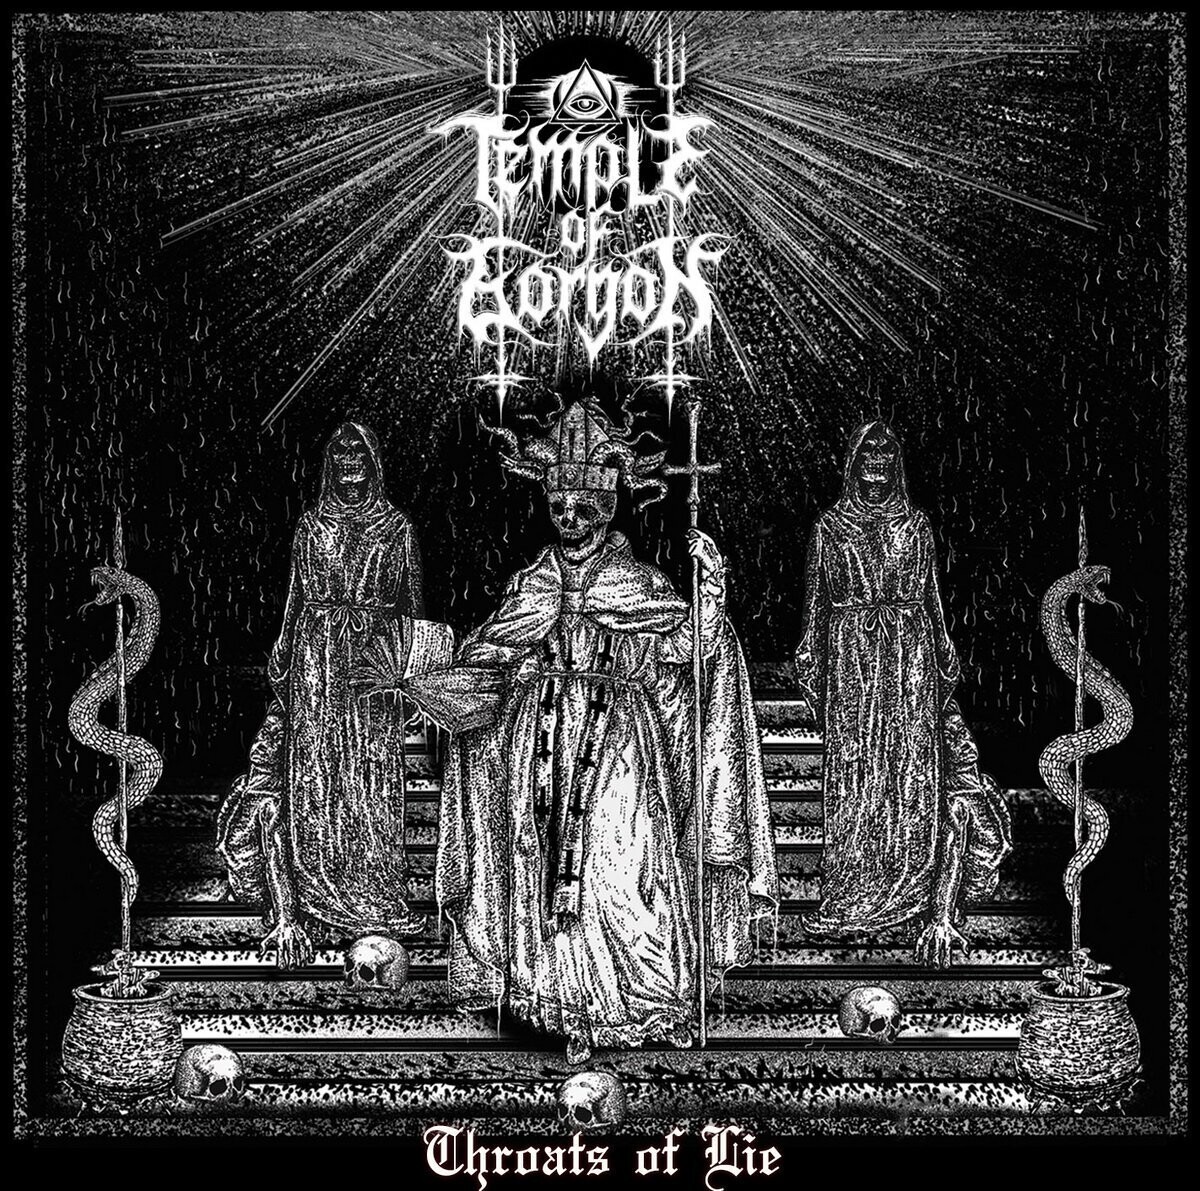 Temple of Gorgon - Throats of Lie | Black Metal TAPE